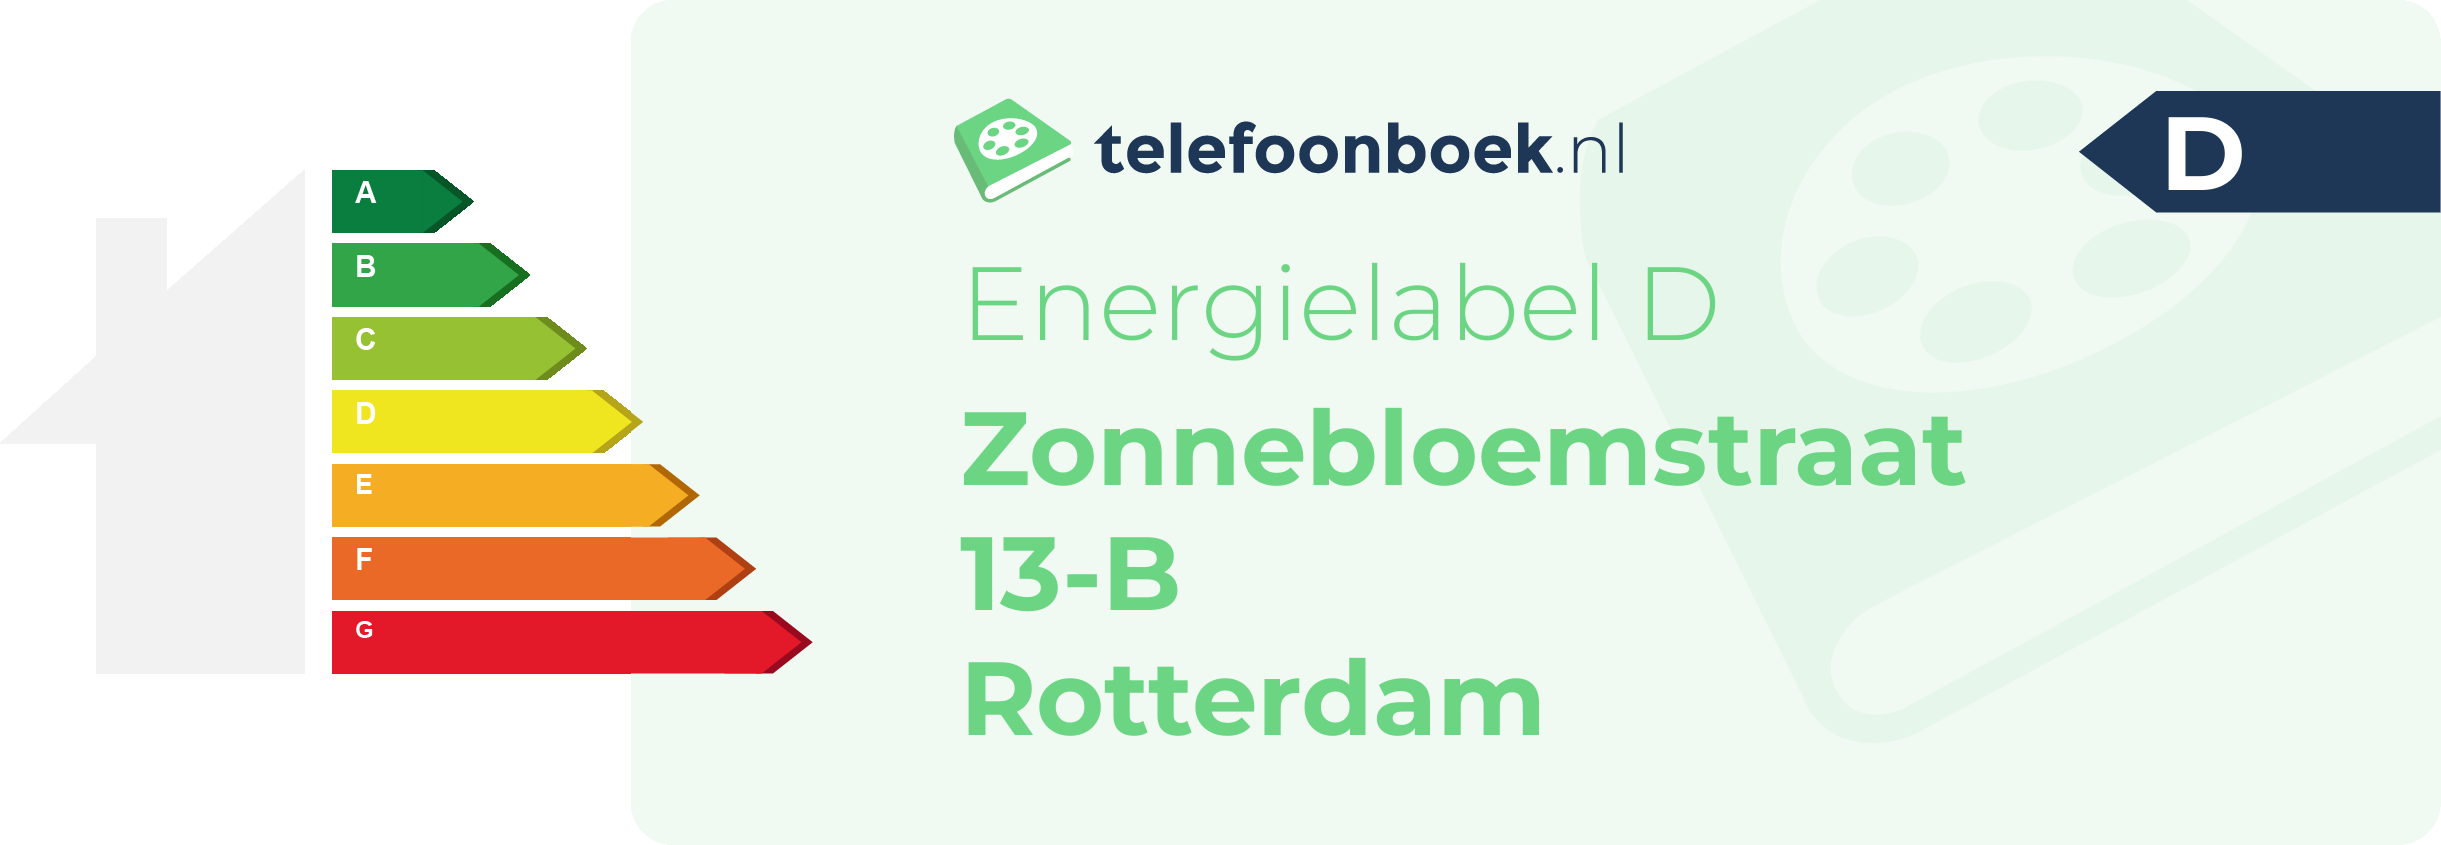 Energielabel Zonnebloemstraat 13-B Rotterdam